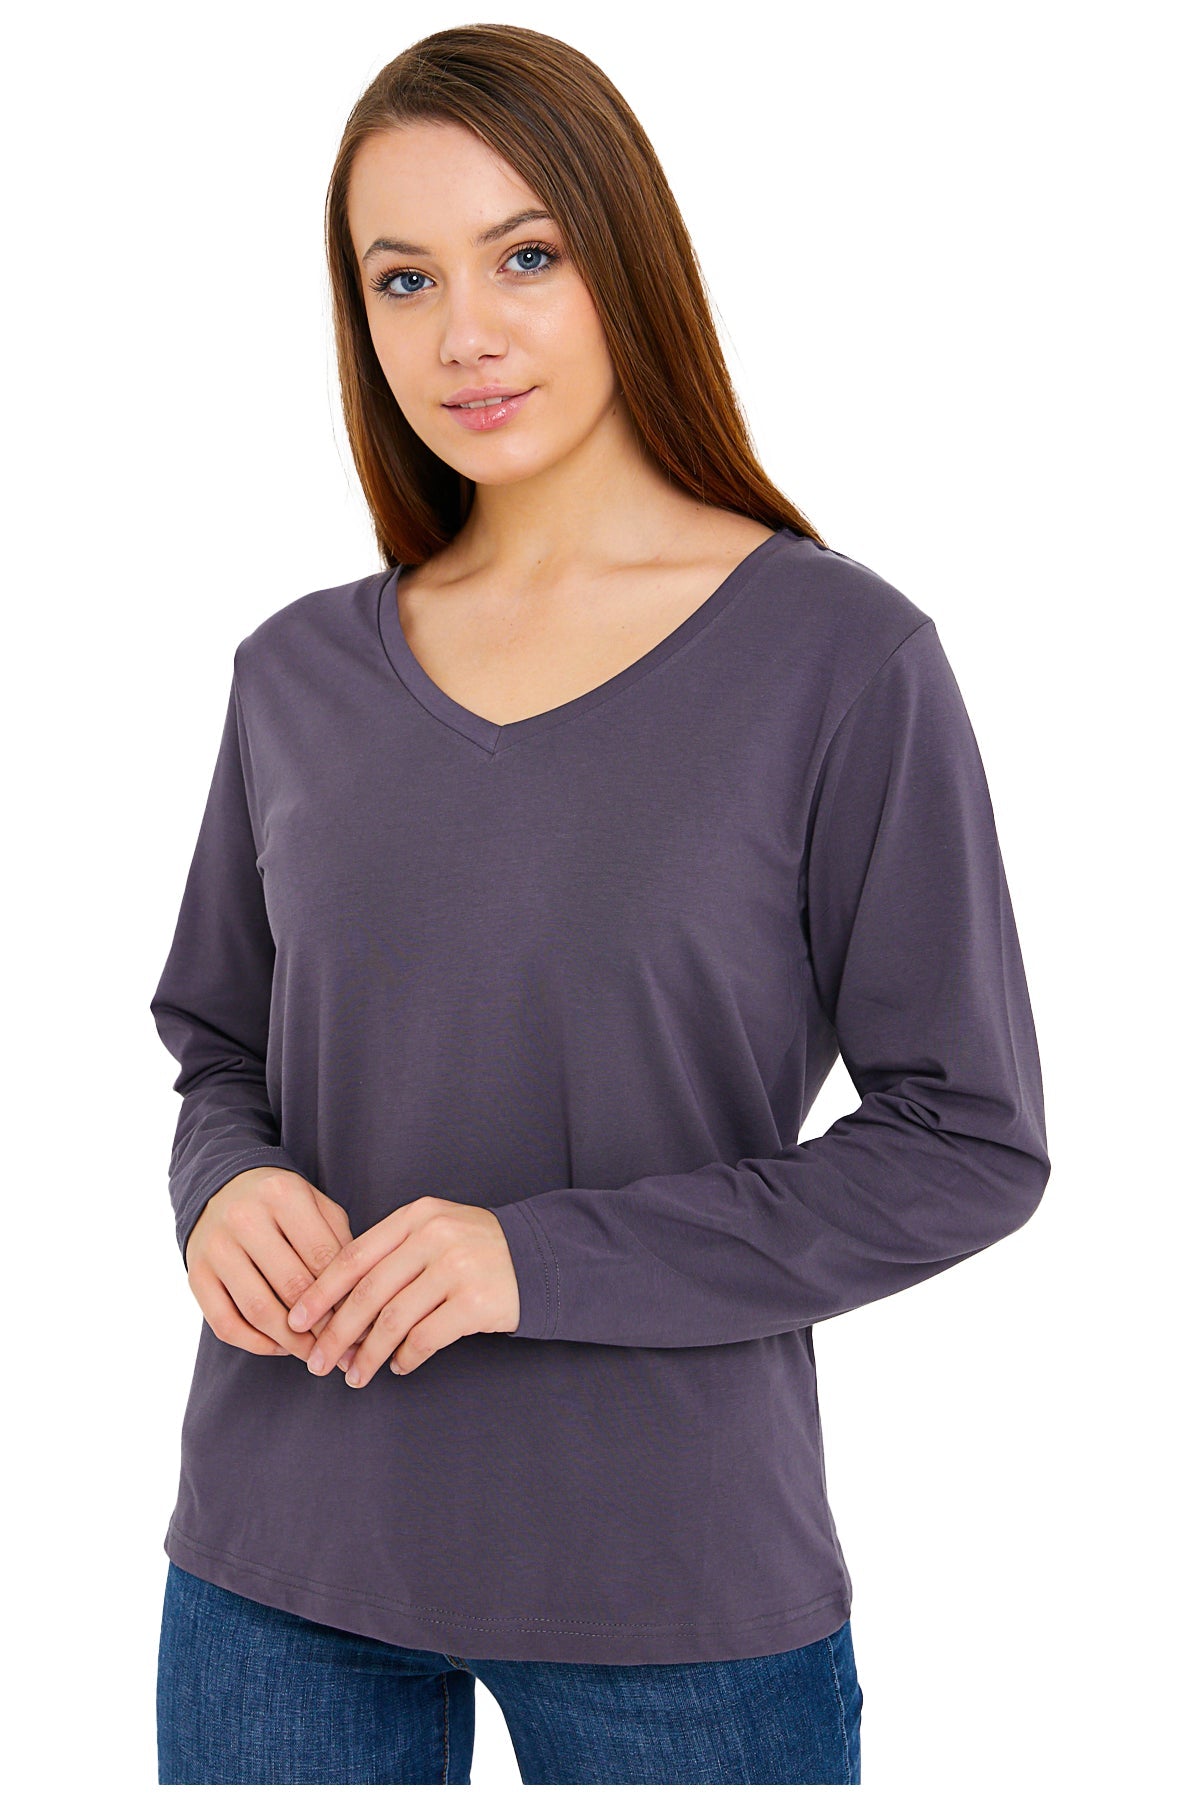 Long Sleeve V-Neck Shirts for Women & Girls - Colorful Pima Cotton-74